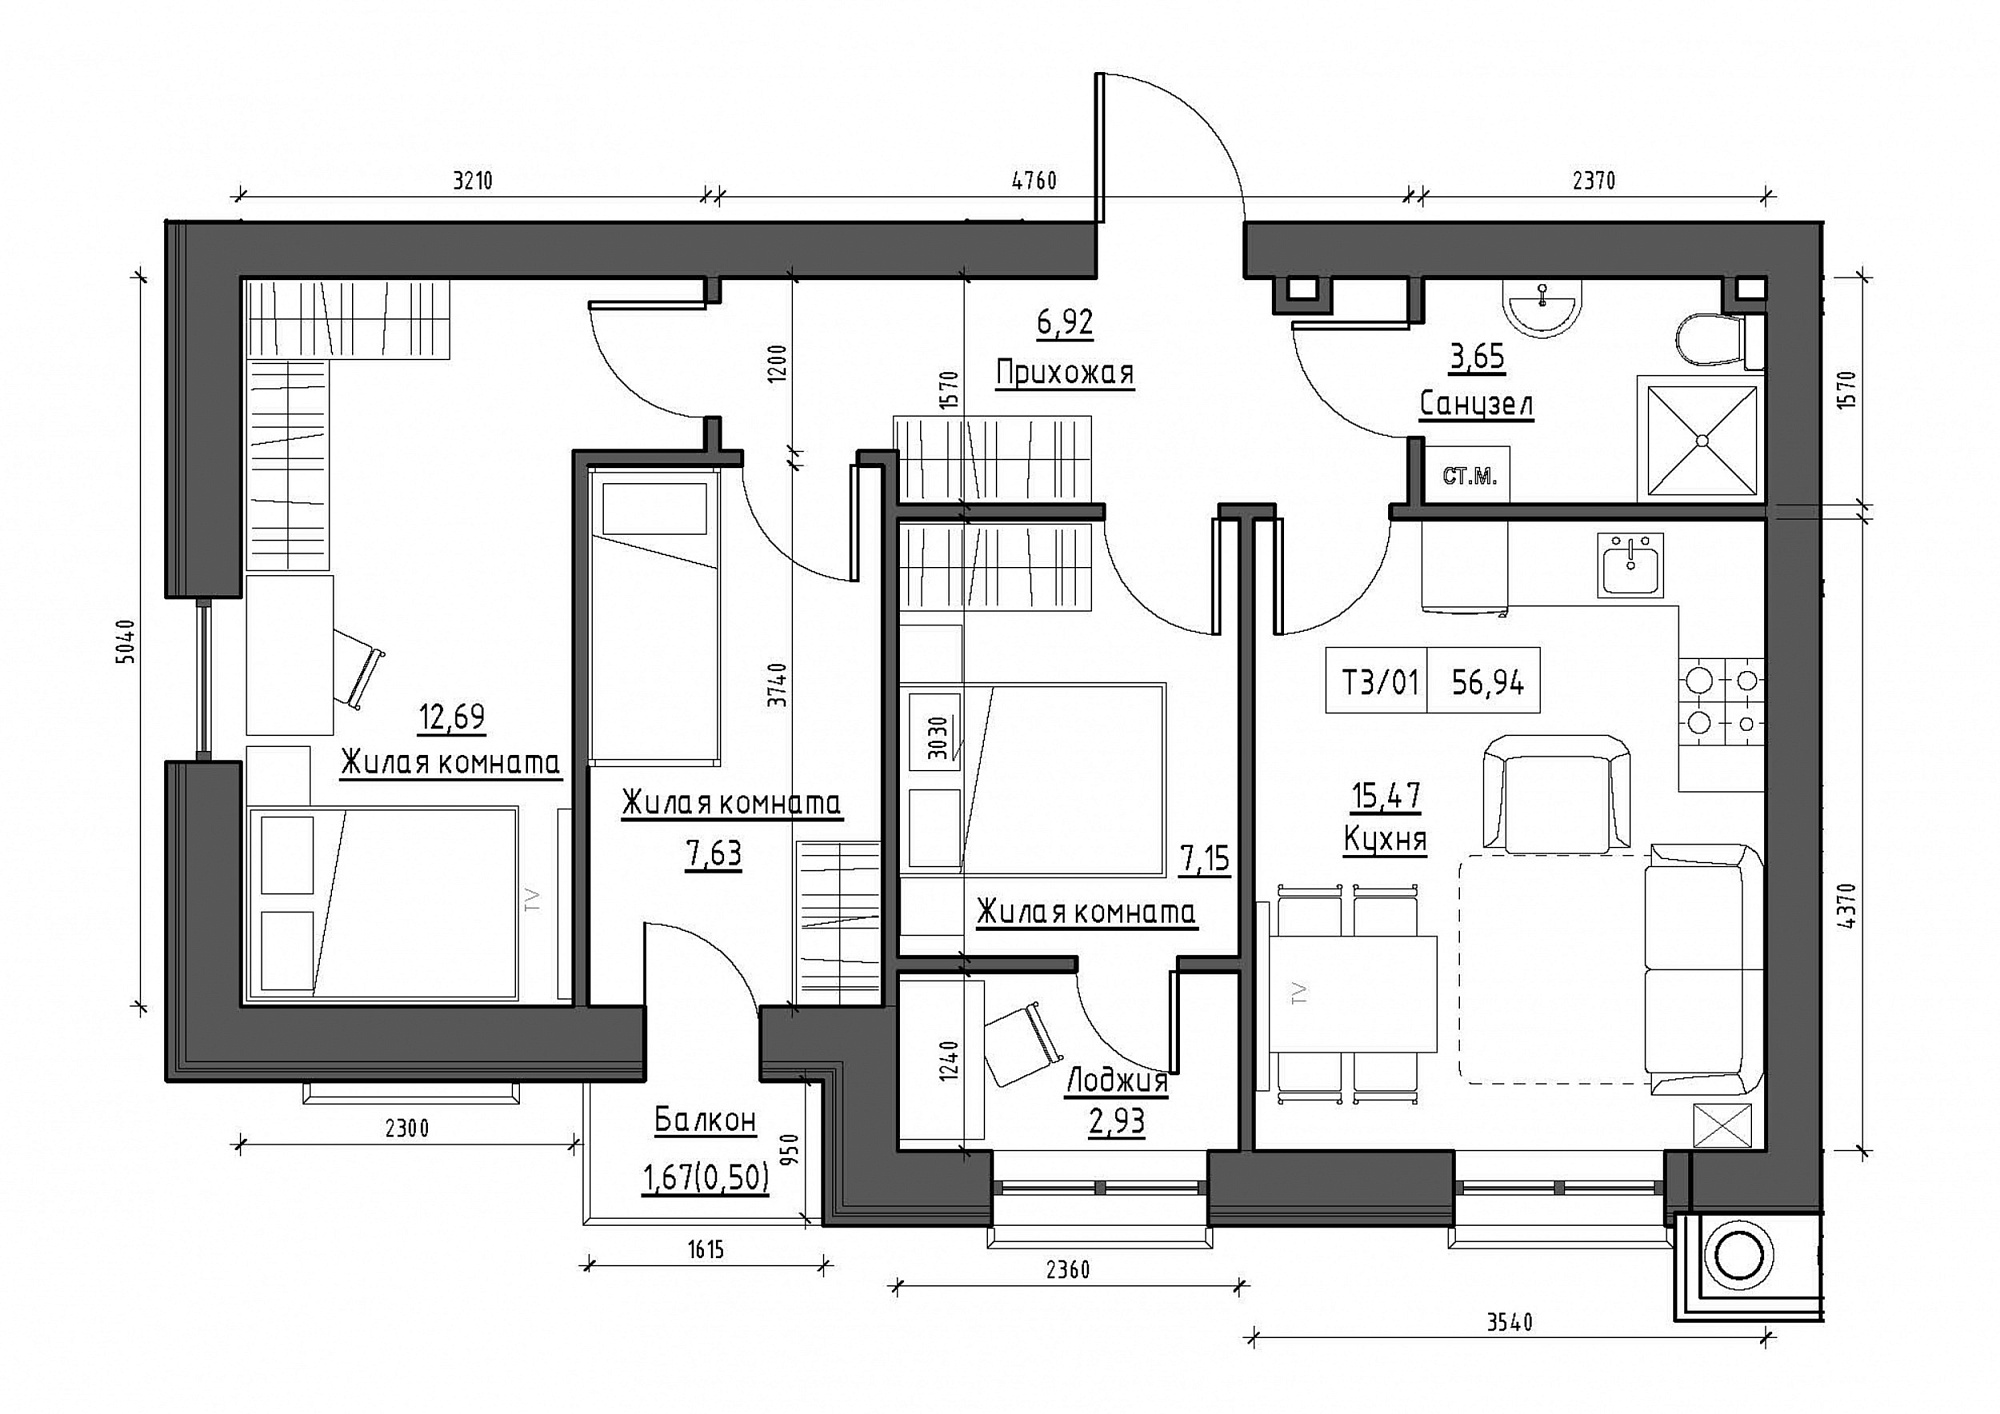 Planning 3-rm flats area 56.94m2, KS-012-03/0008.